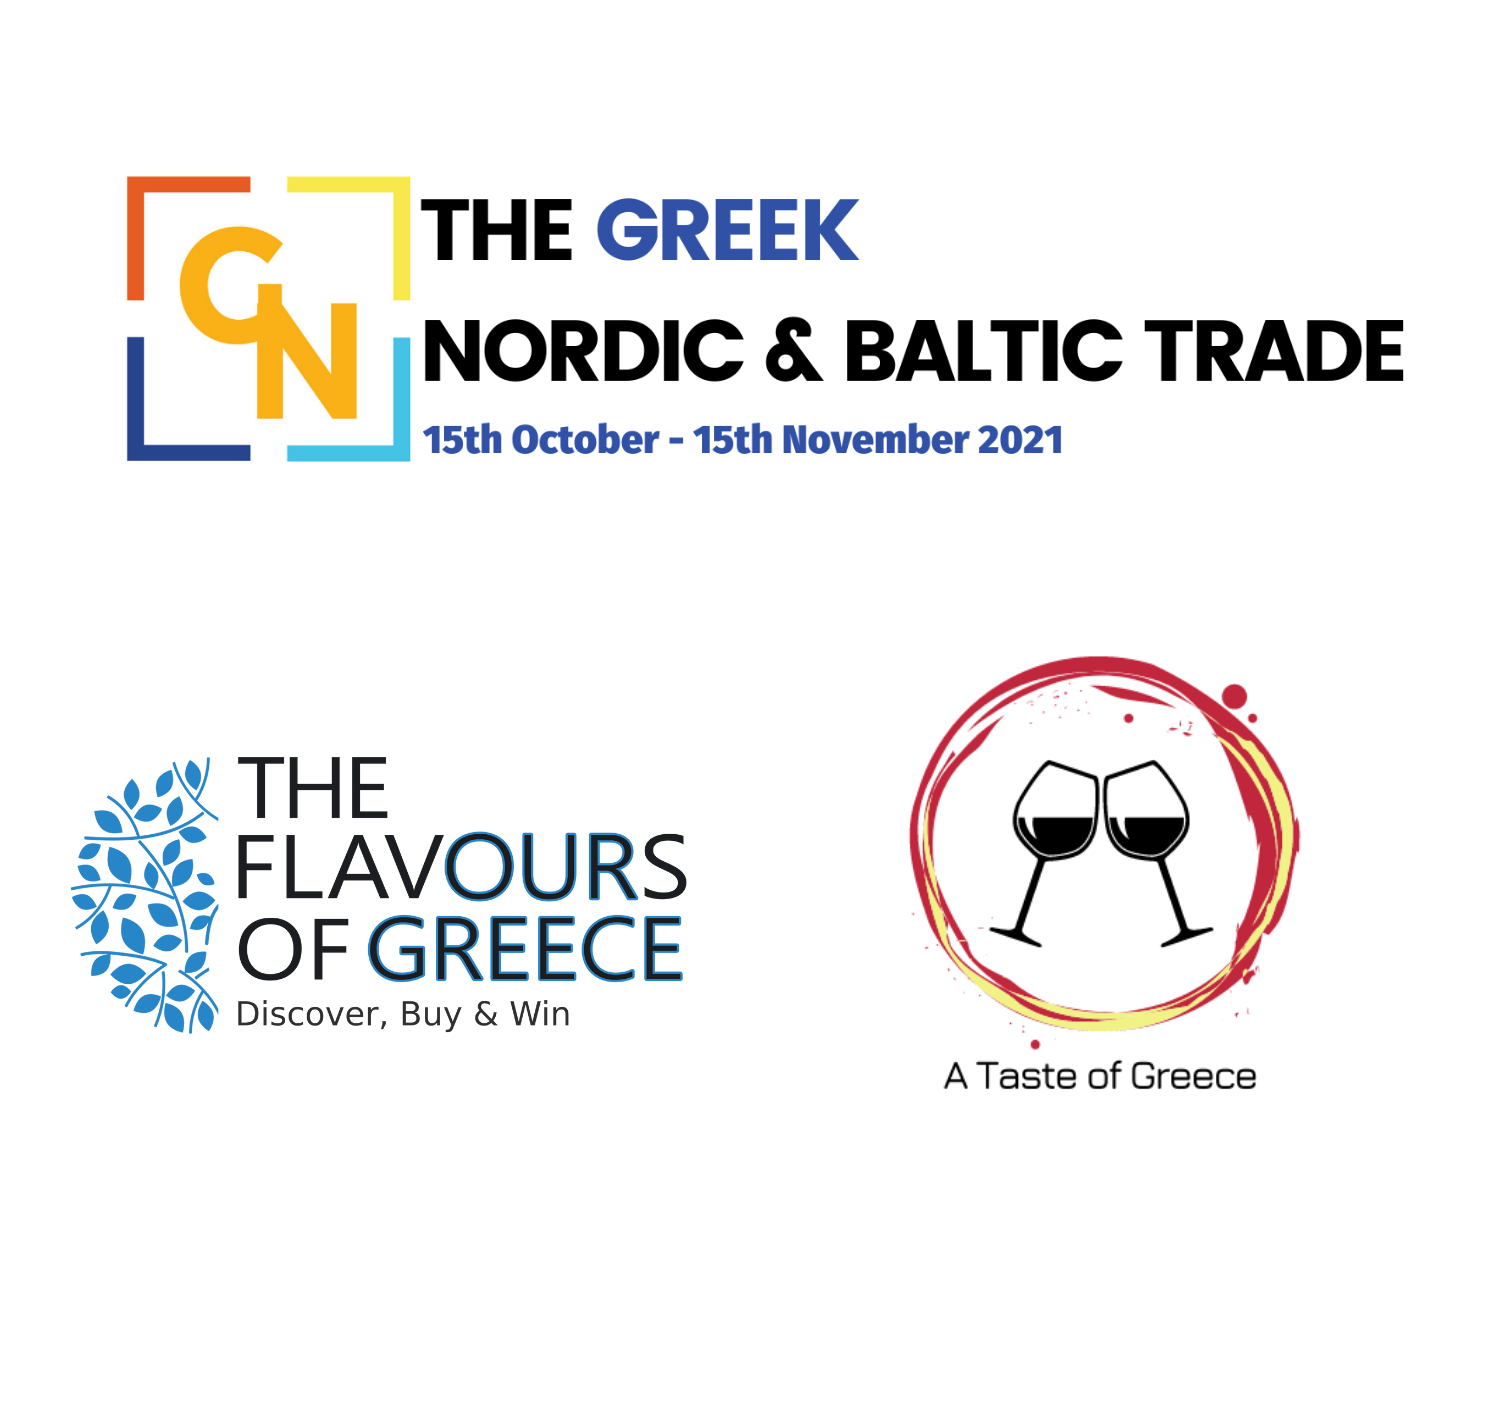 The Greek Nordic & Baltic Trade